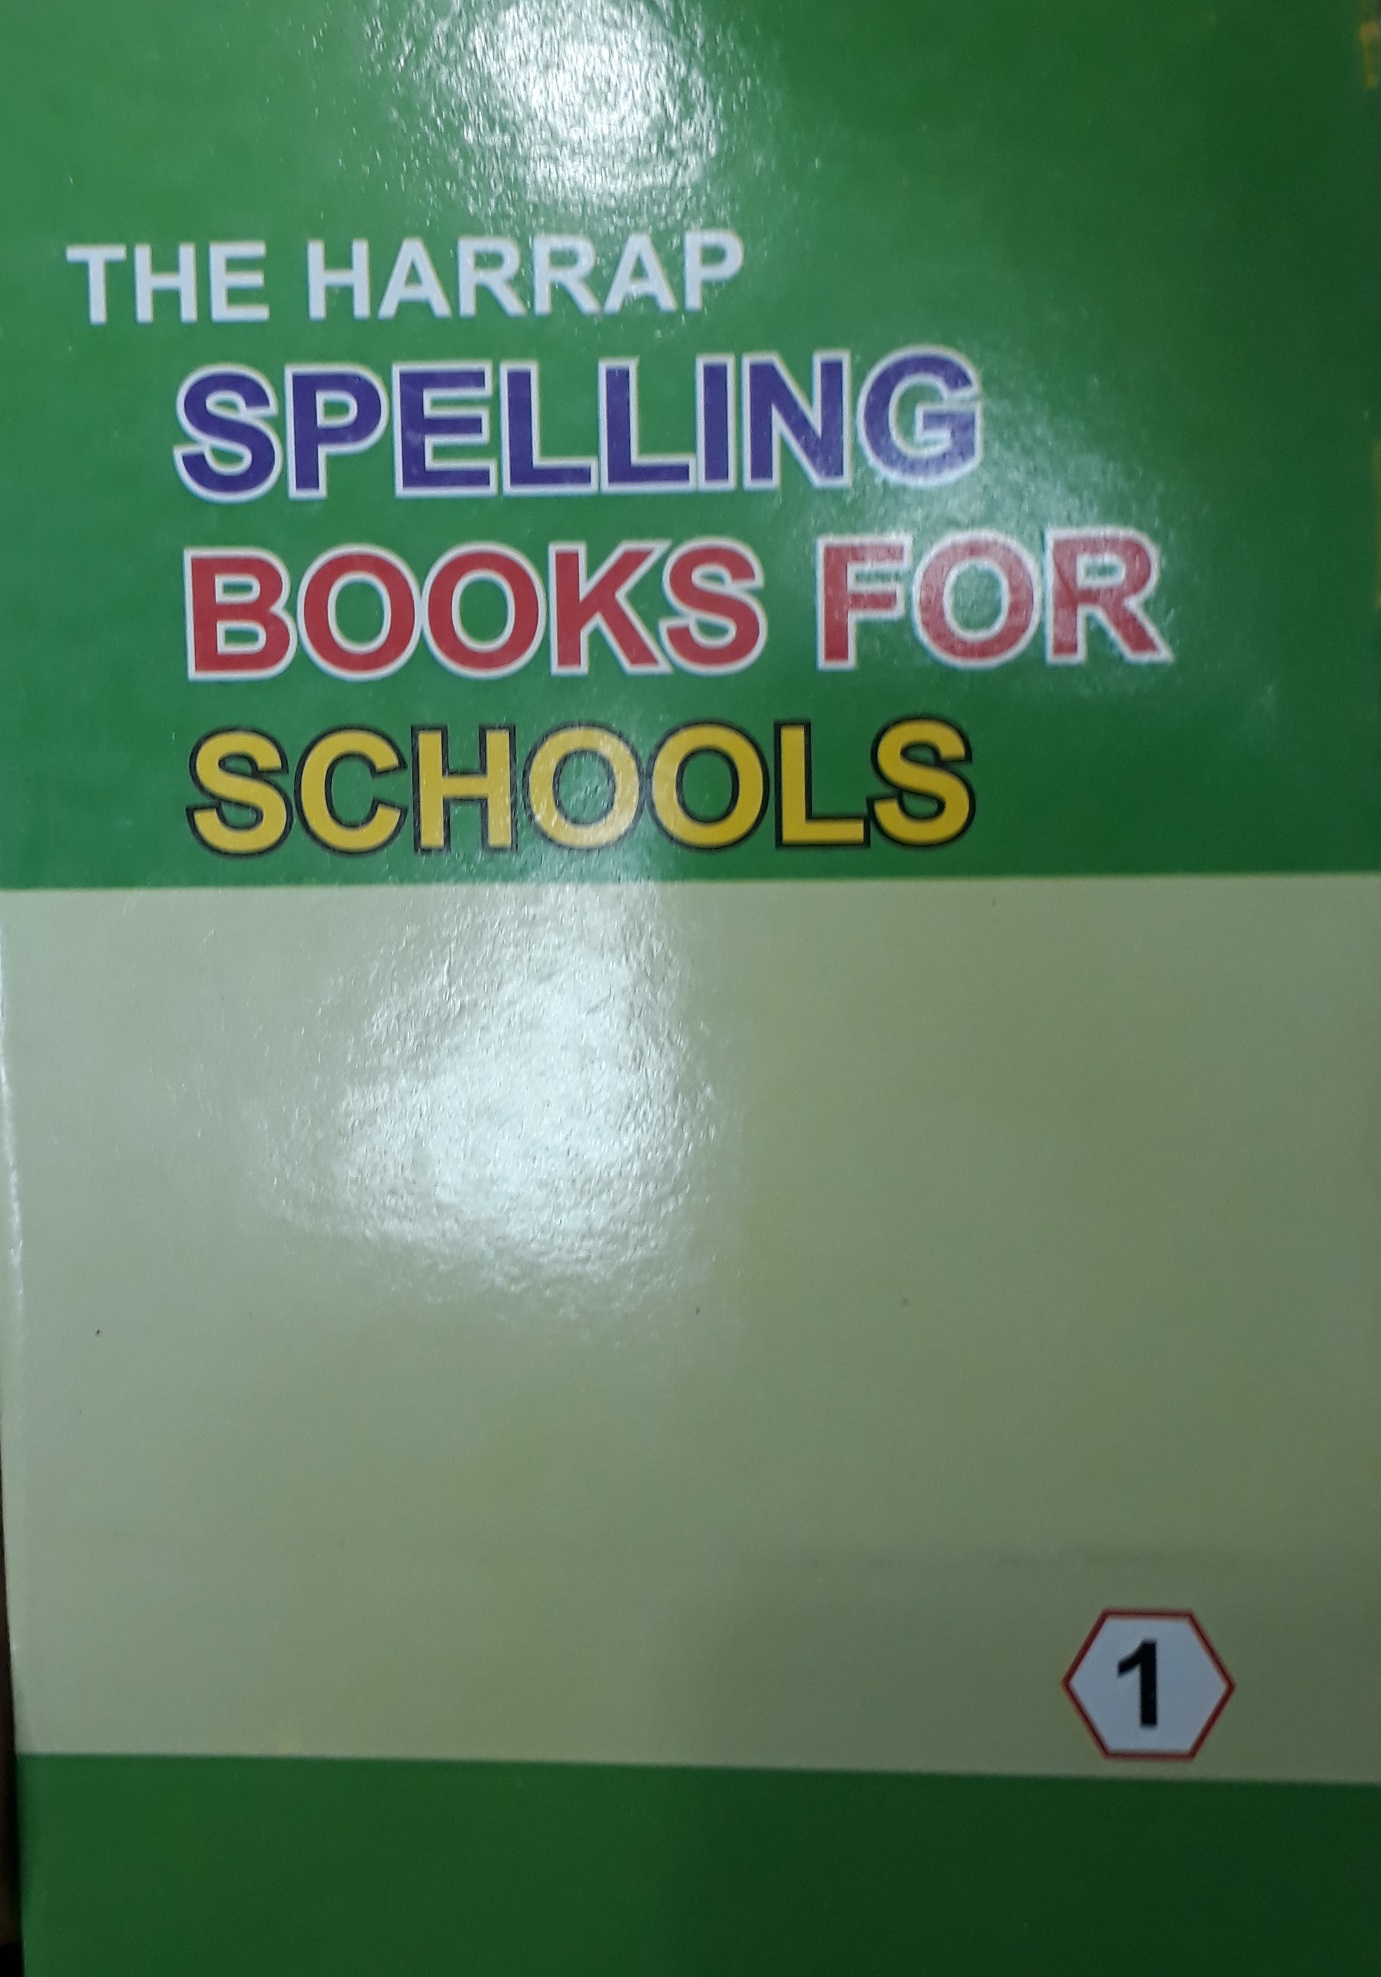 THE HARRAP SPELLING BOOKS FOR SCHOOLS – 1